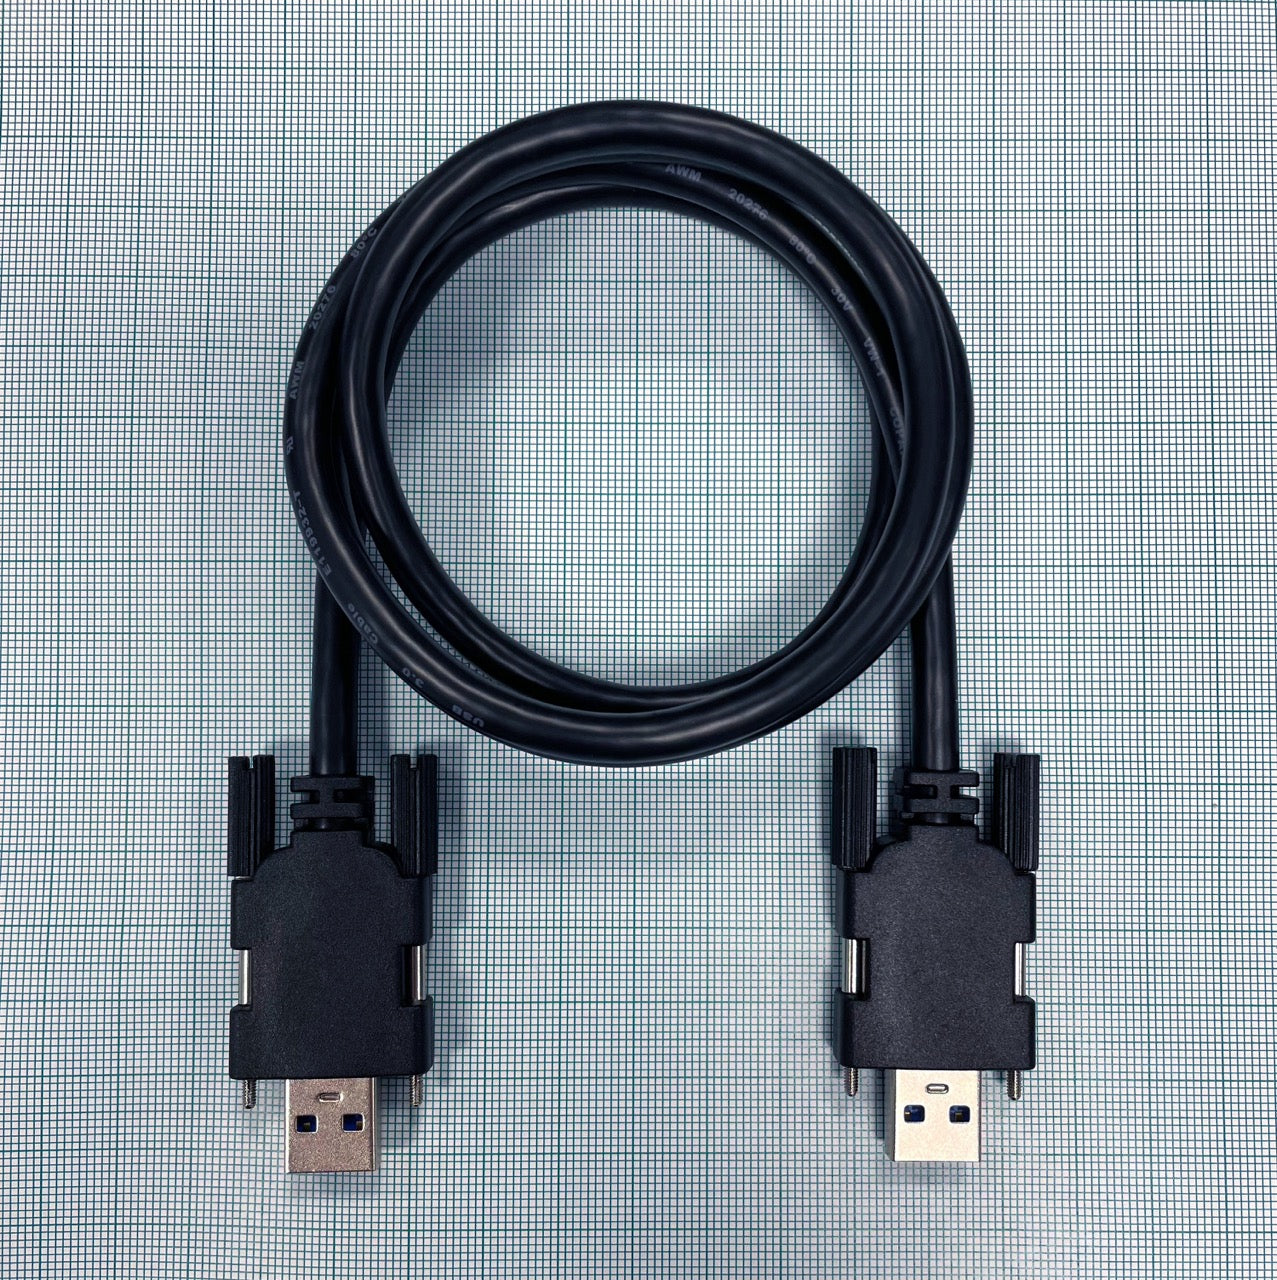 USB 3.0 and Machine Vision, Newnex